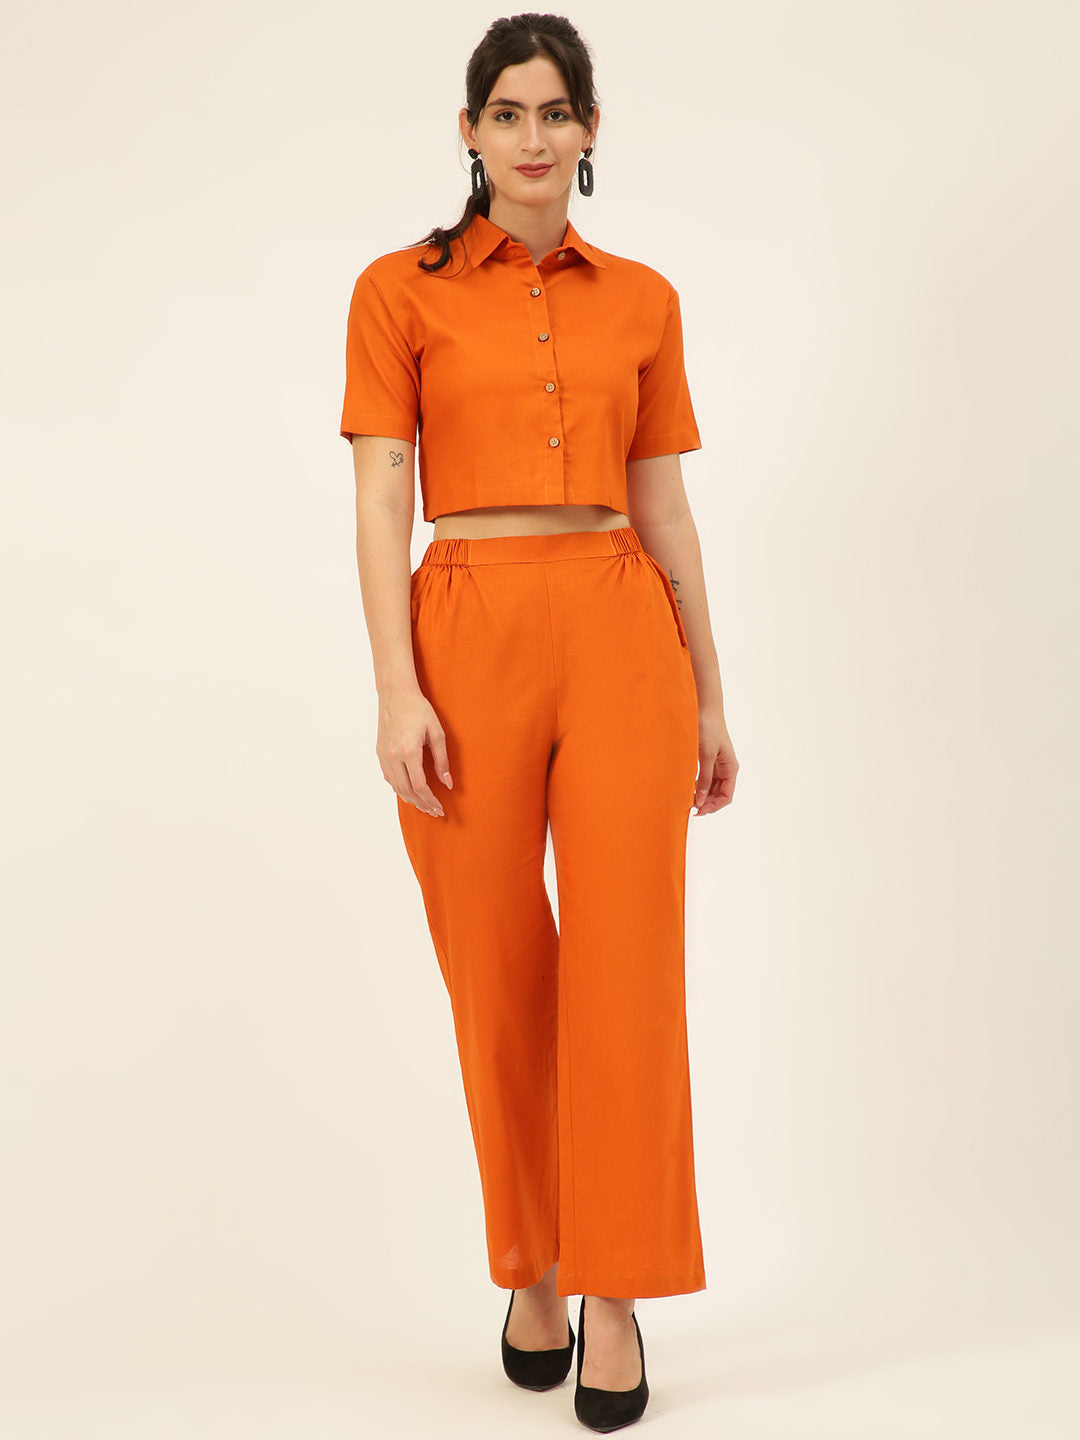 Womens Orange Crops & Capris - Bottoms, Clothing